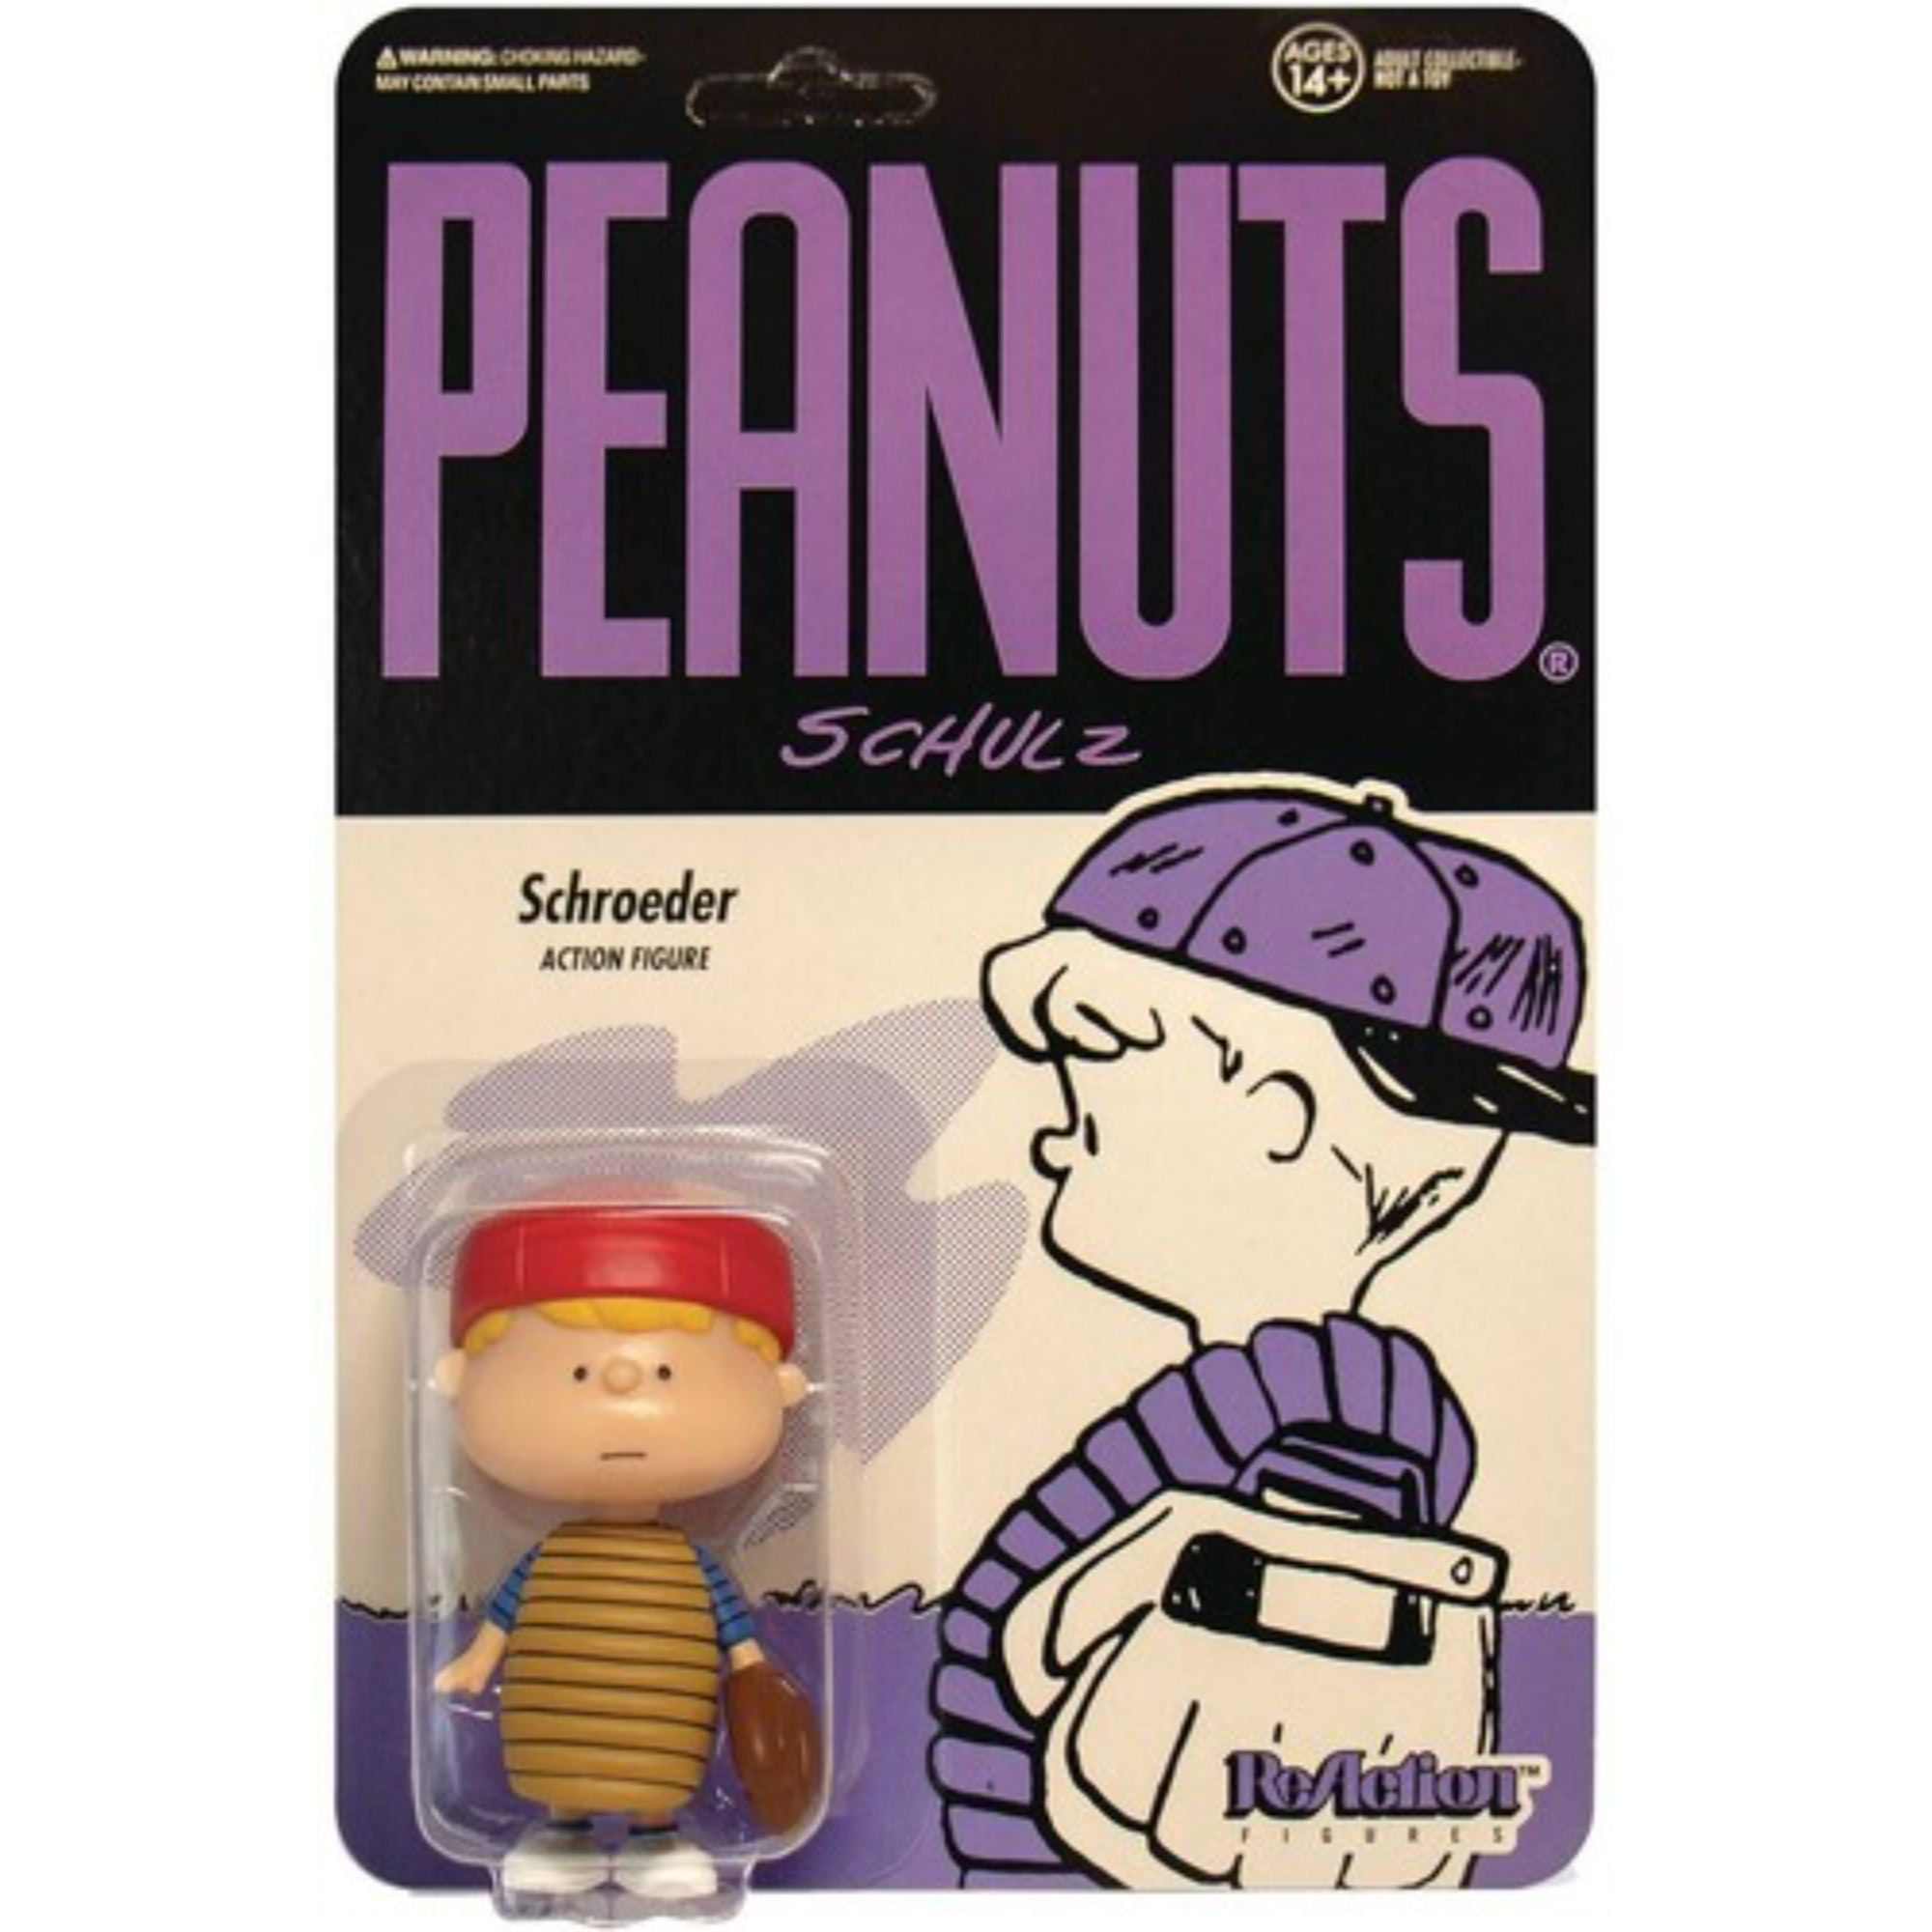 schroeder playing peanuts